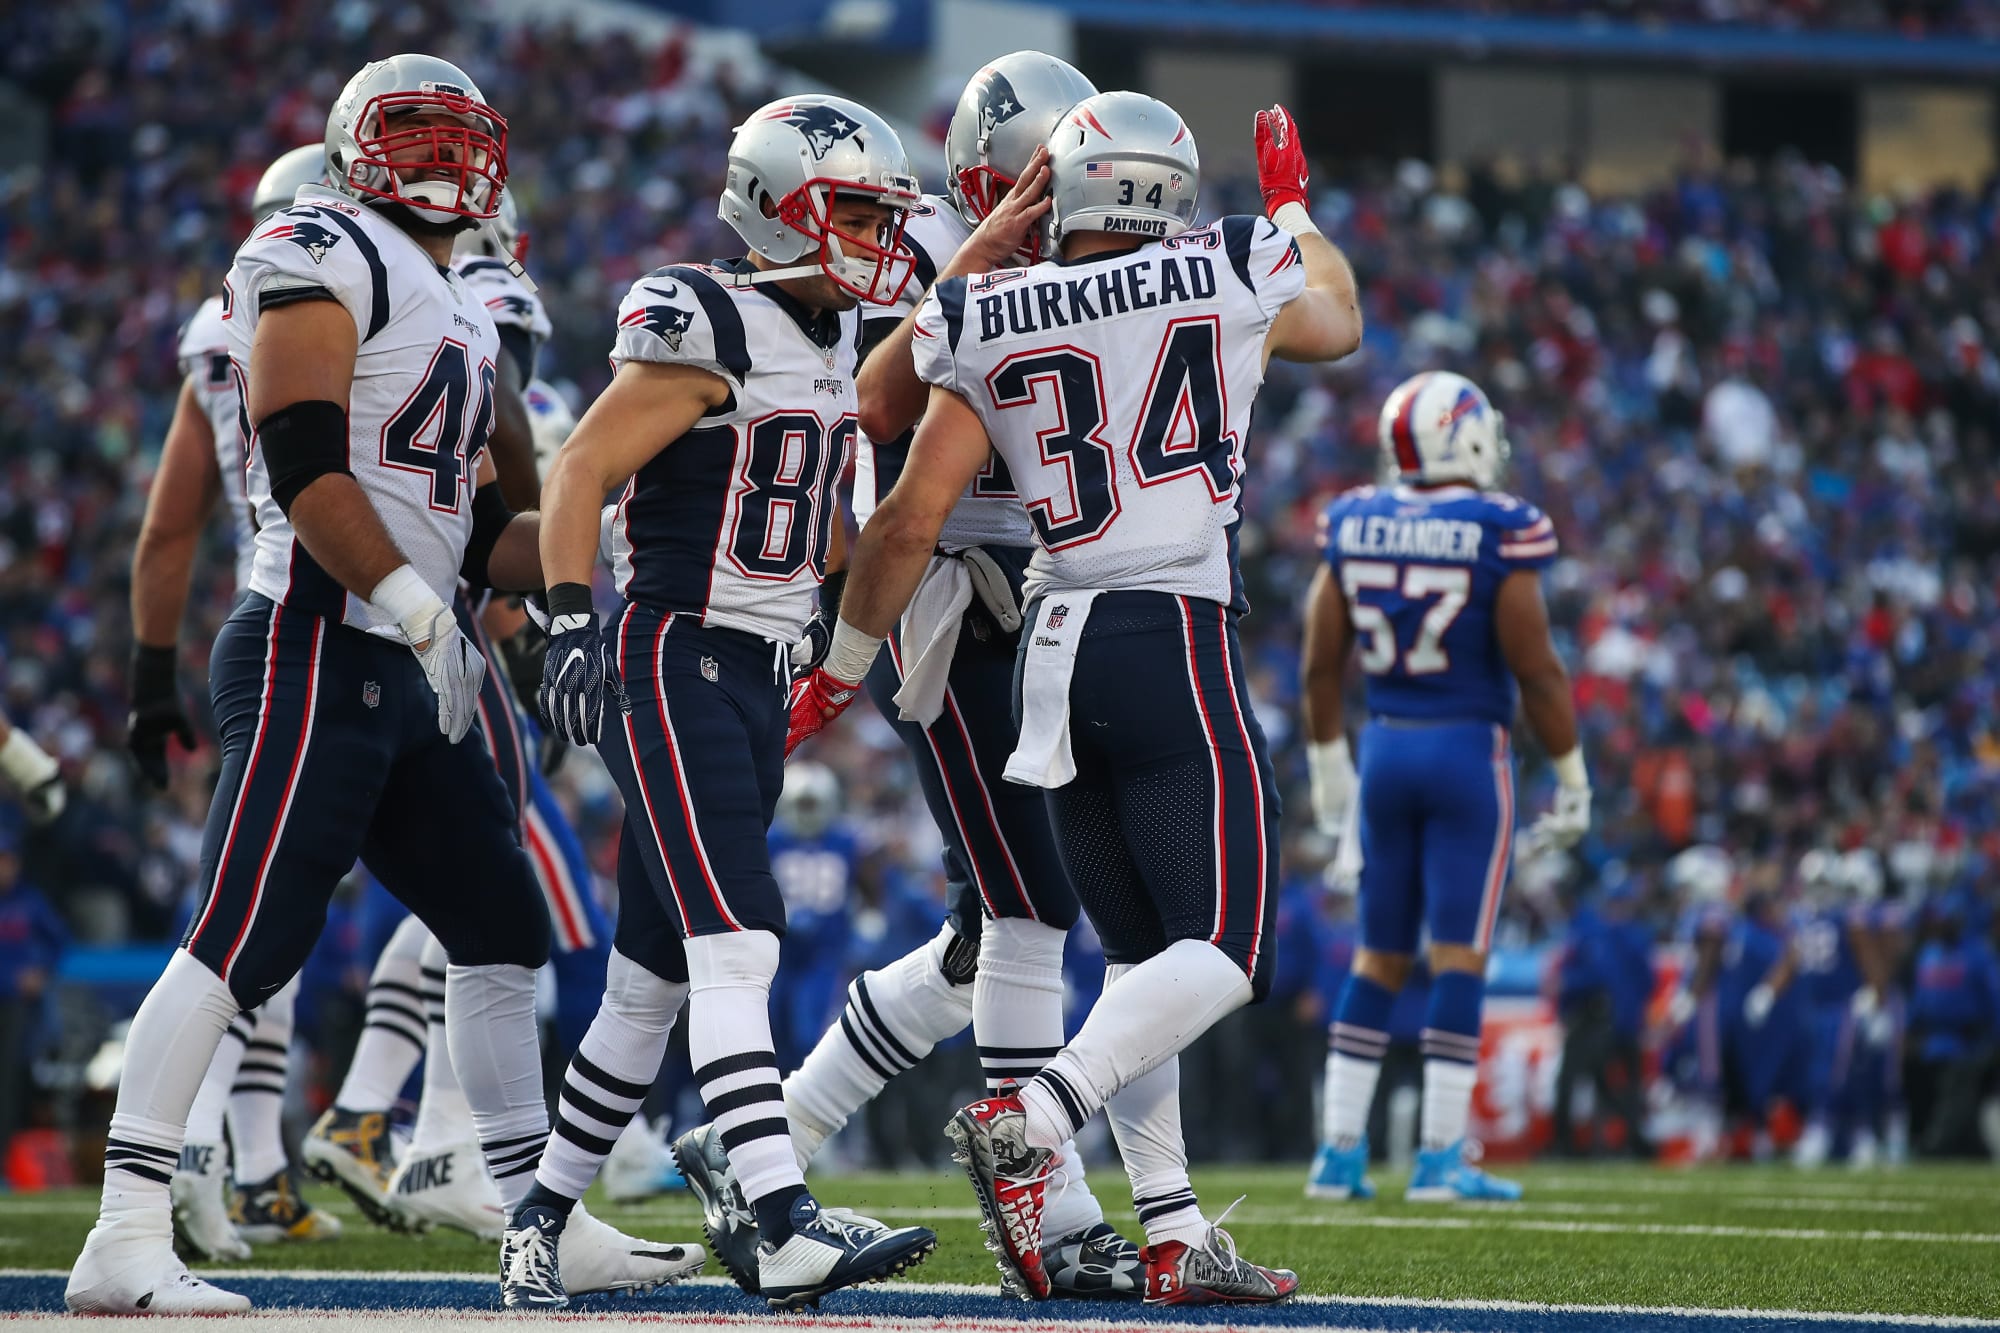 New England Patriots vs Buffalo Bills recap and highlights